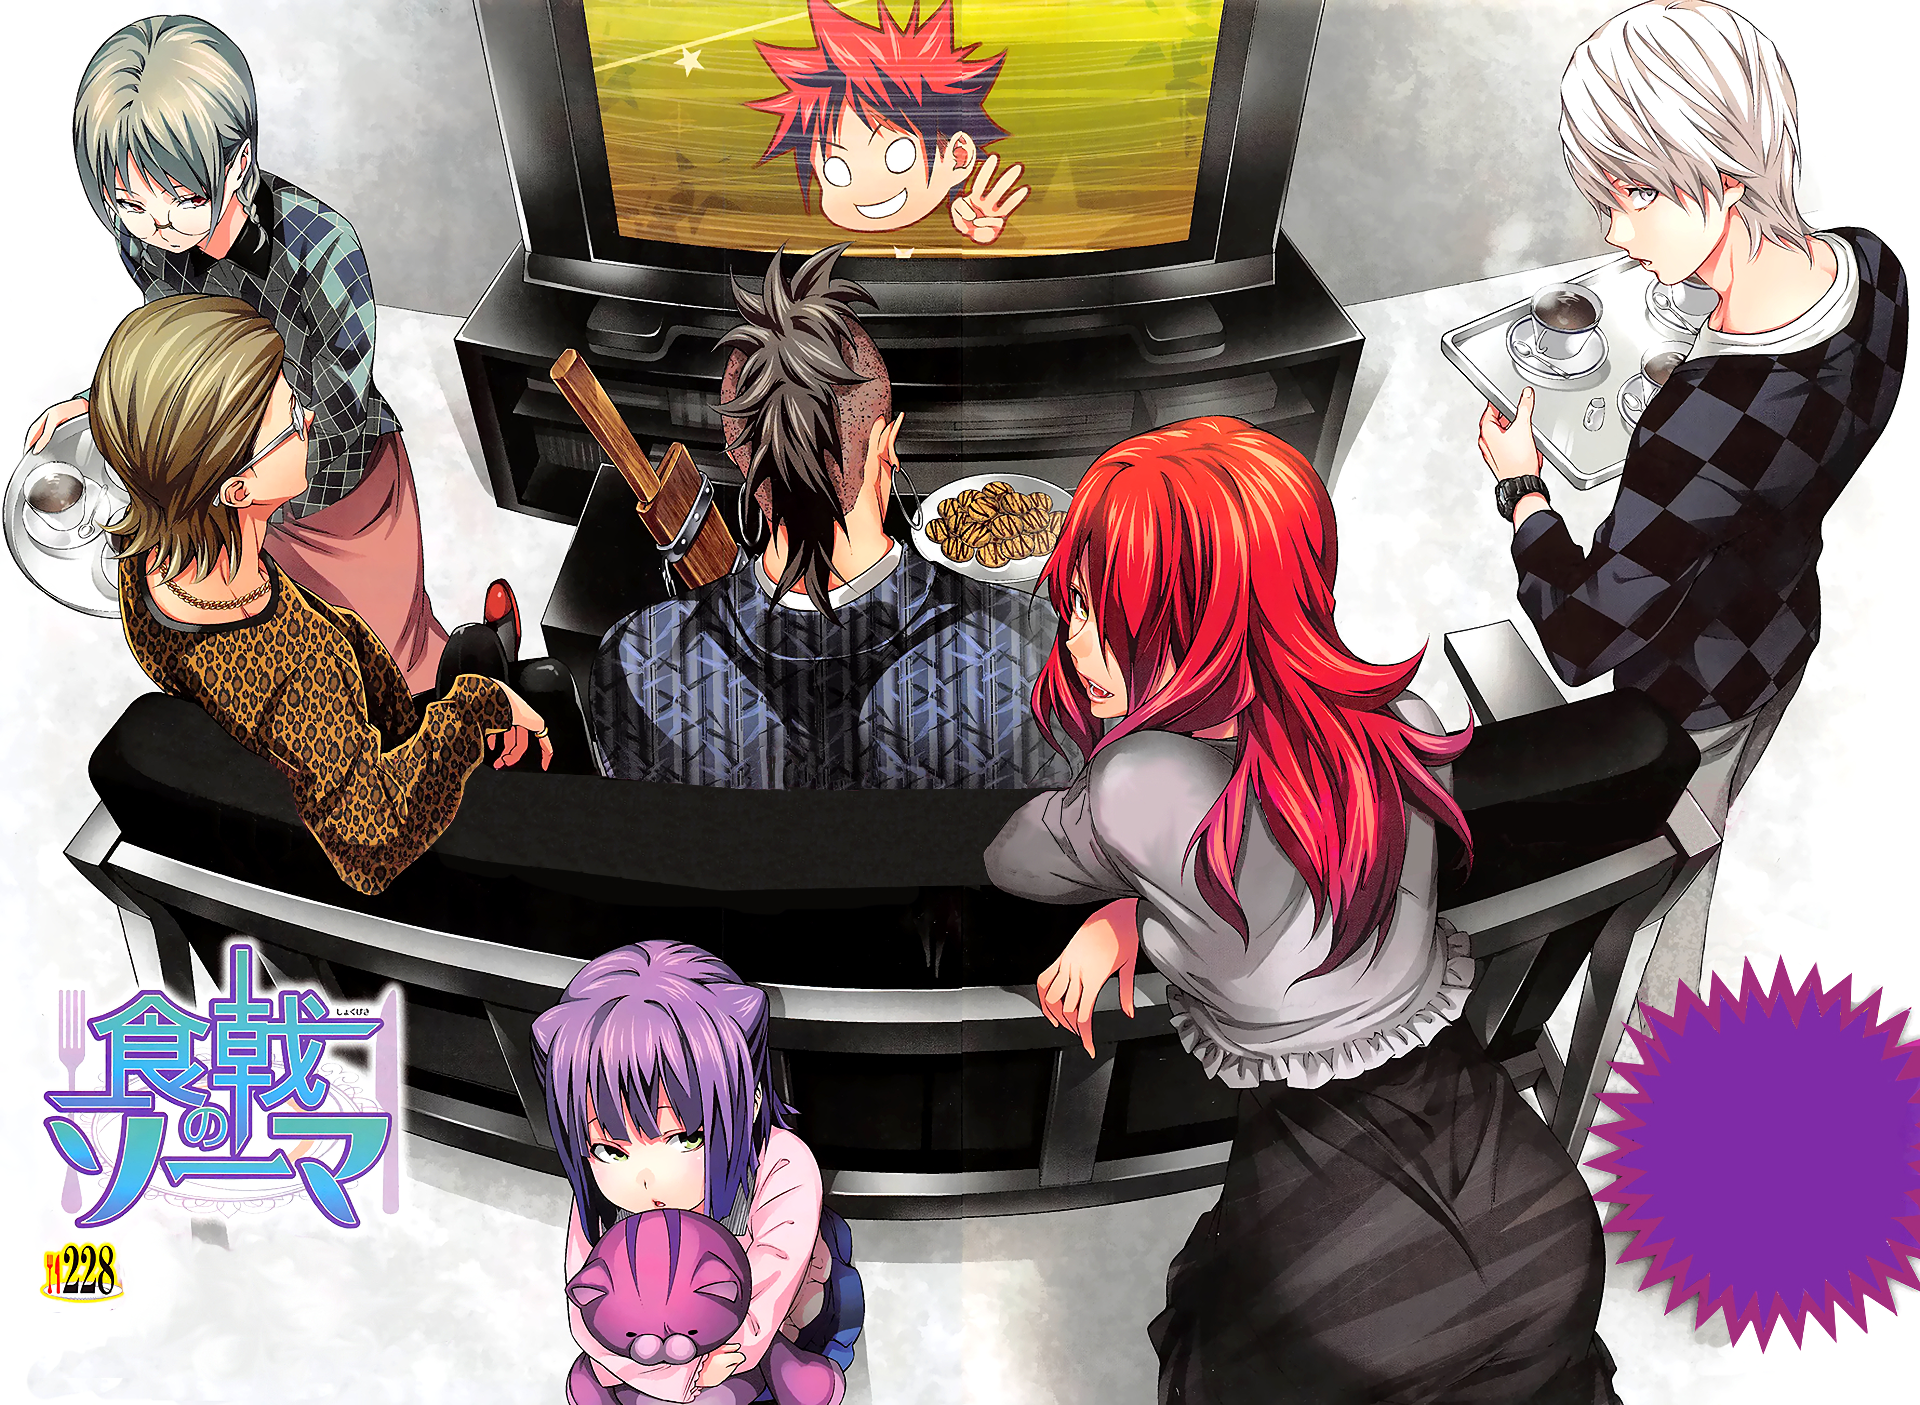 Anime Food Wars: Shokugeki no Soma HD Wallpaper Background Image. 